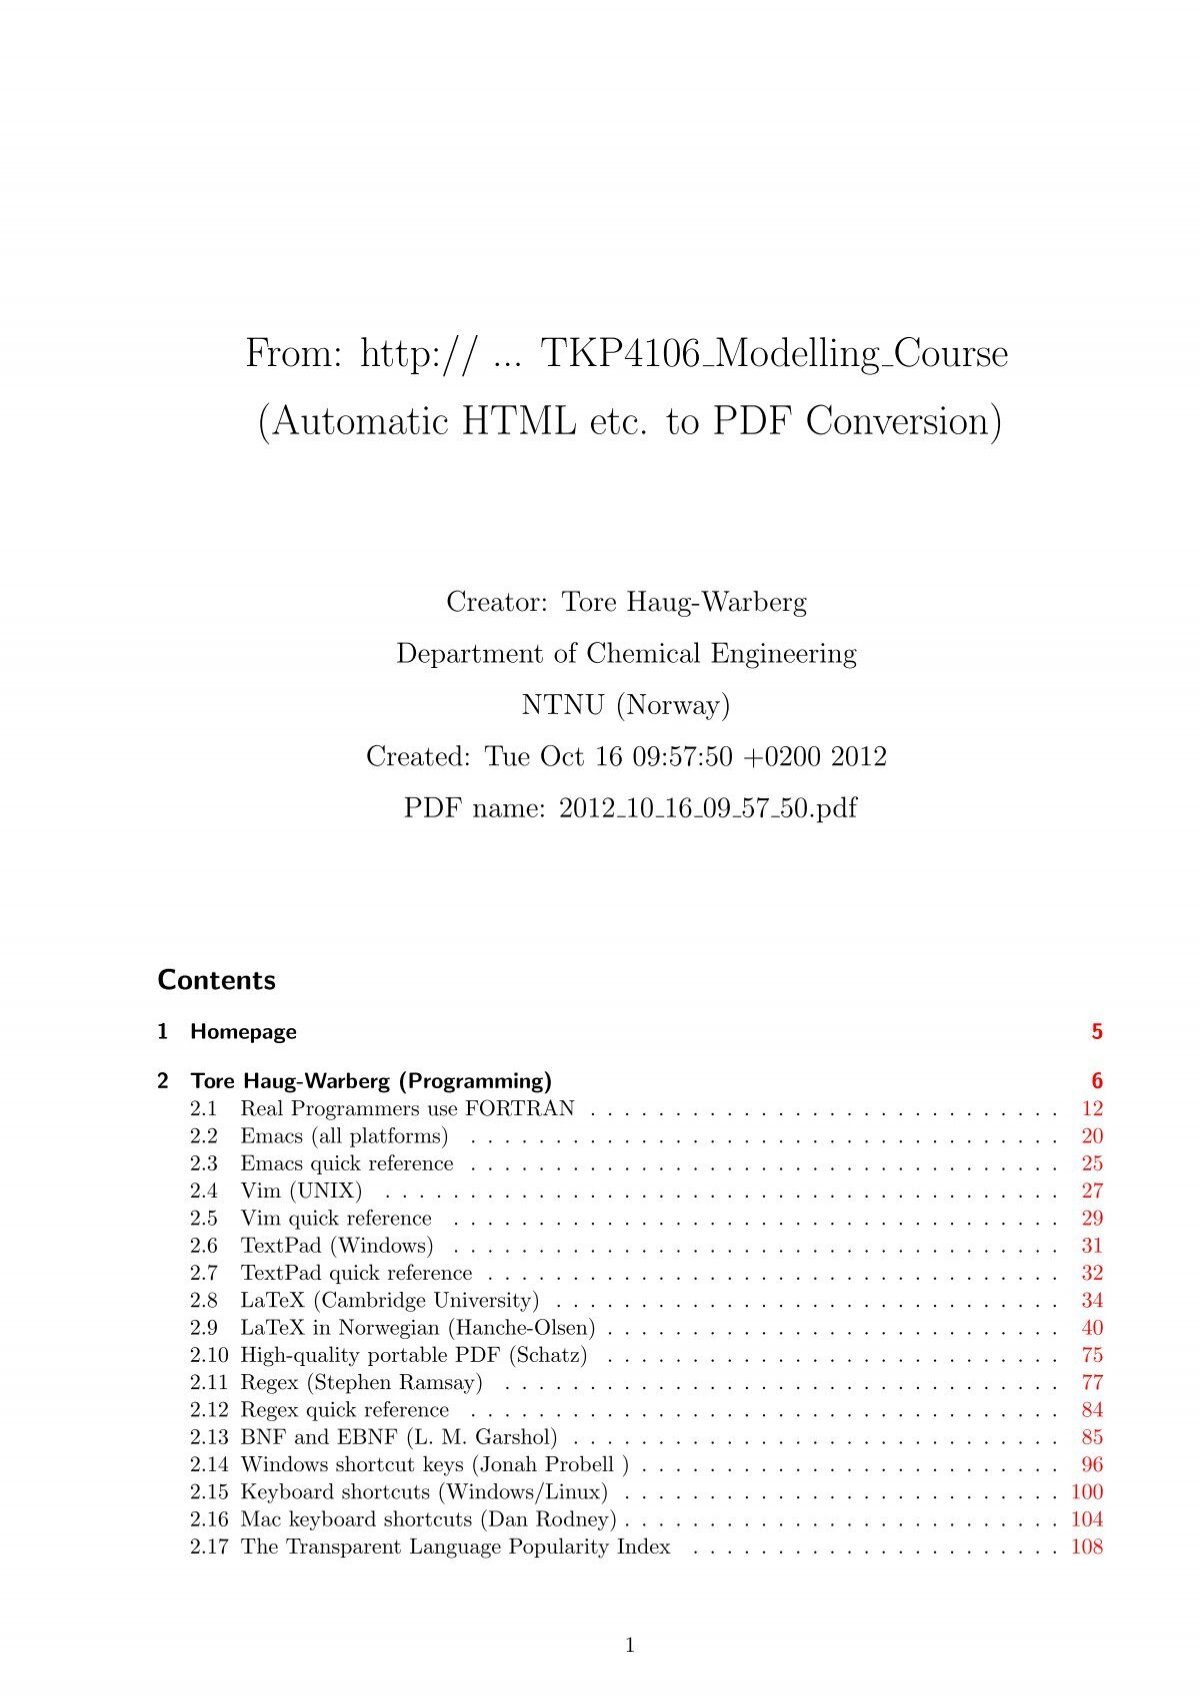 10 MB pdf-file here - NTNU